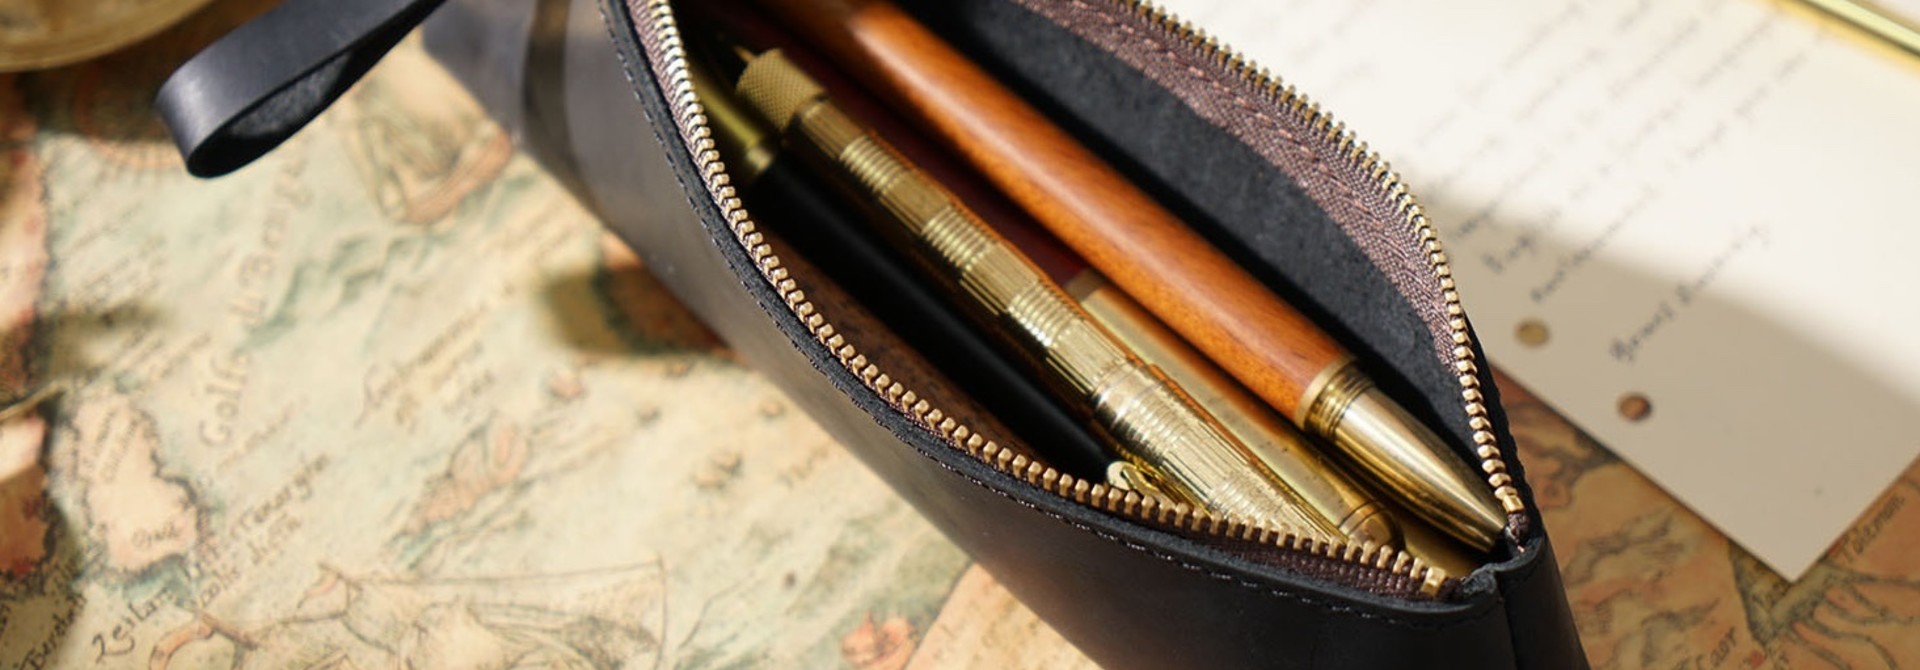 Pencil Case - Pen Holder - Leather - Fits More Than 15 Pens - Pencil Pouch With Zipper for Men Women - Black